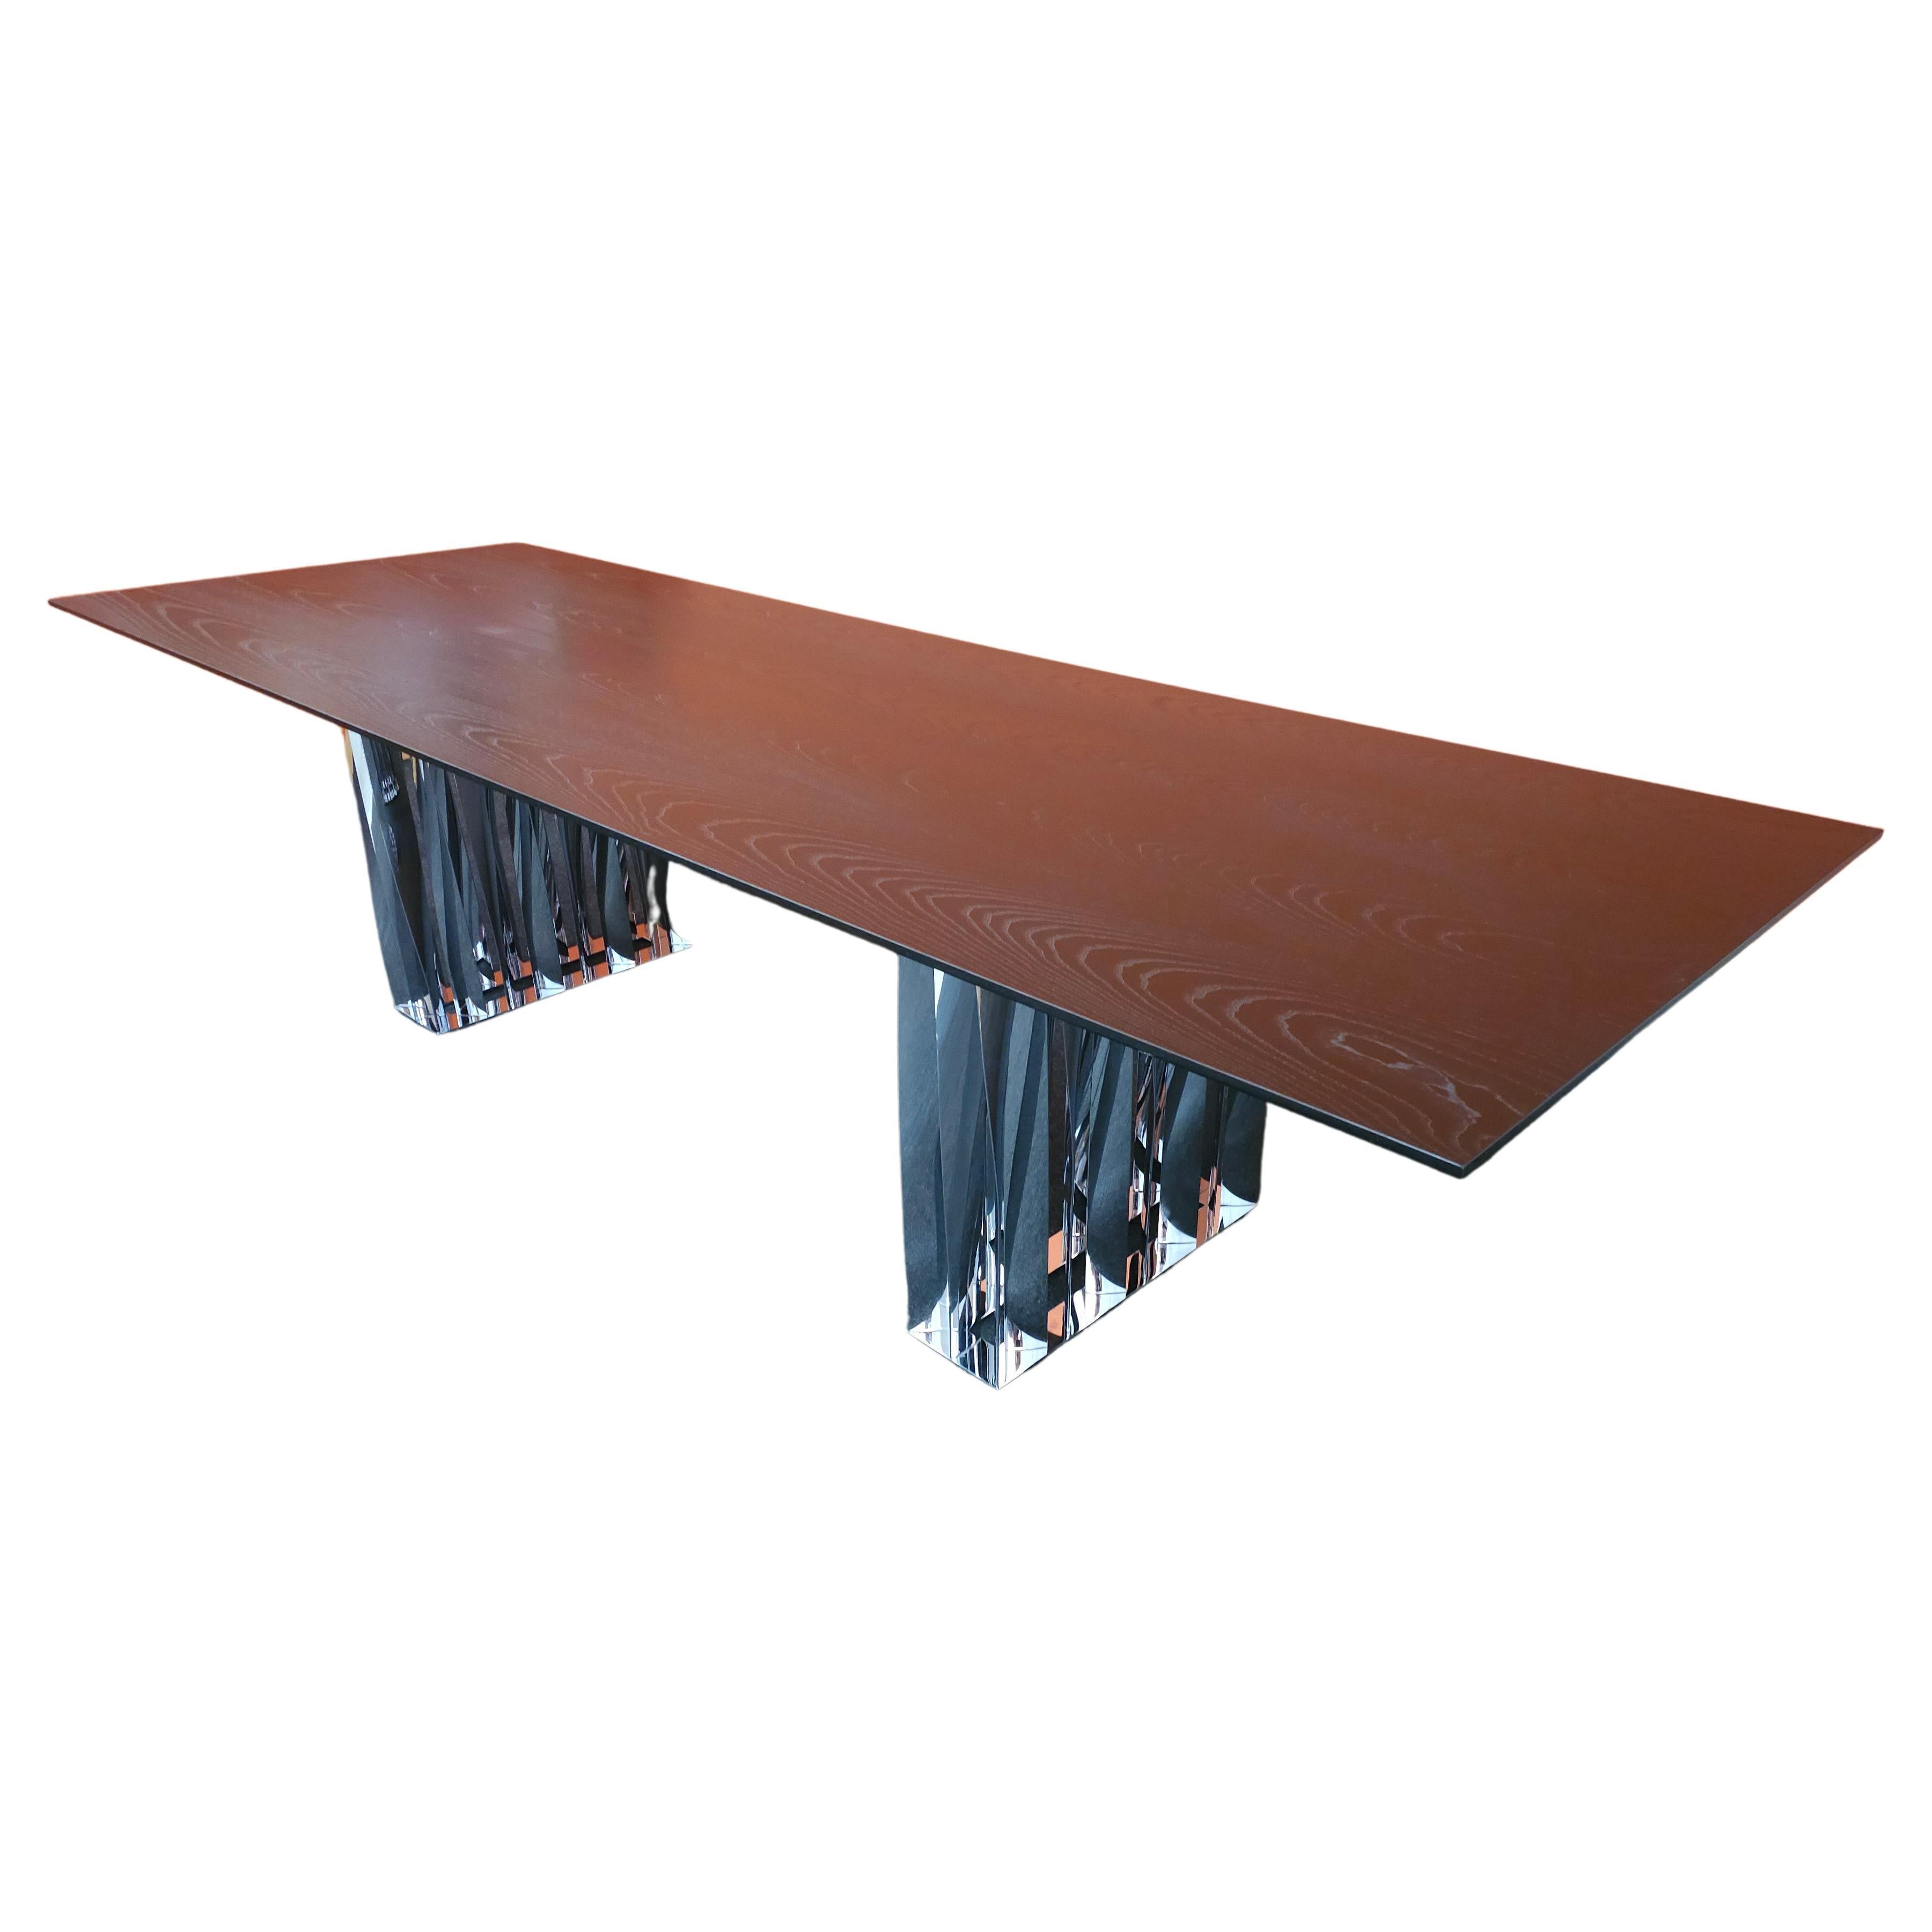 "Boboli" Dining Table designed by Rodolfo Dordoni for Cassina